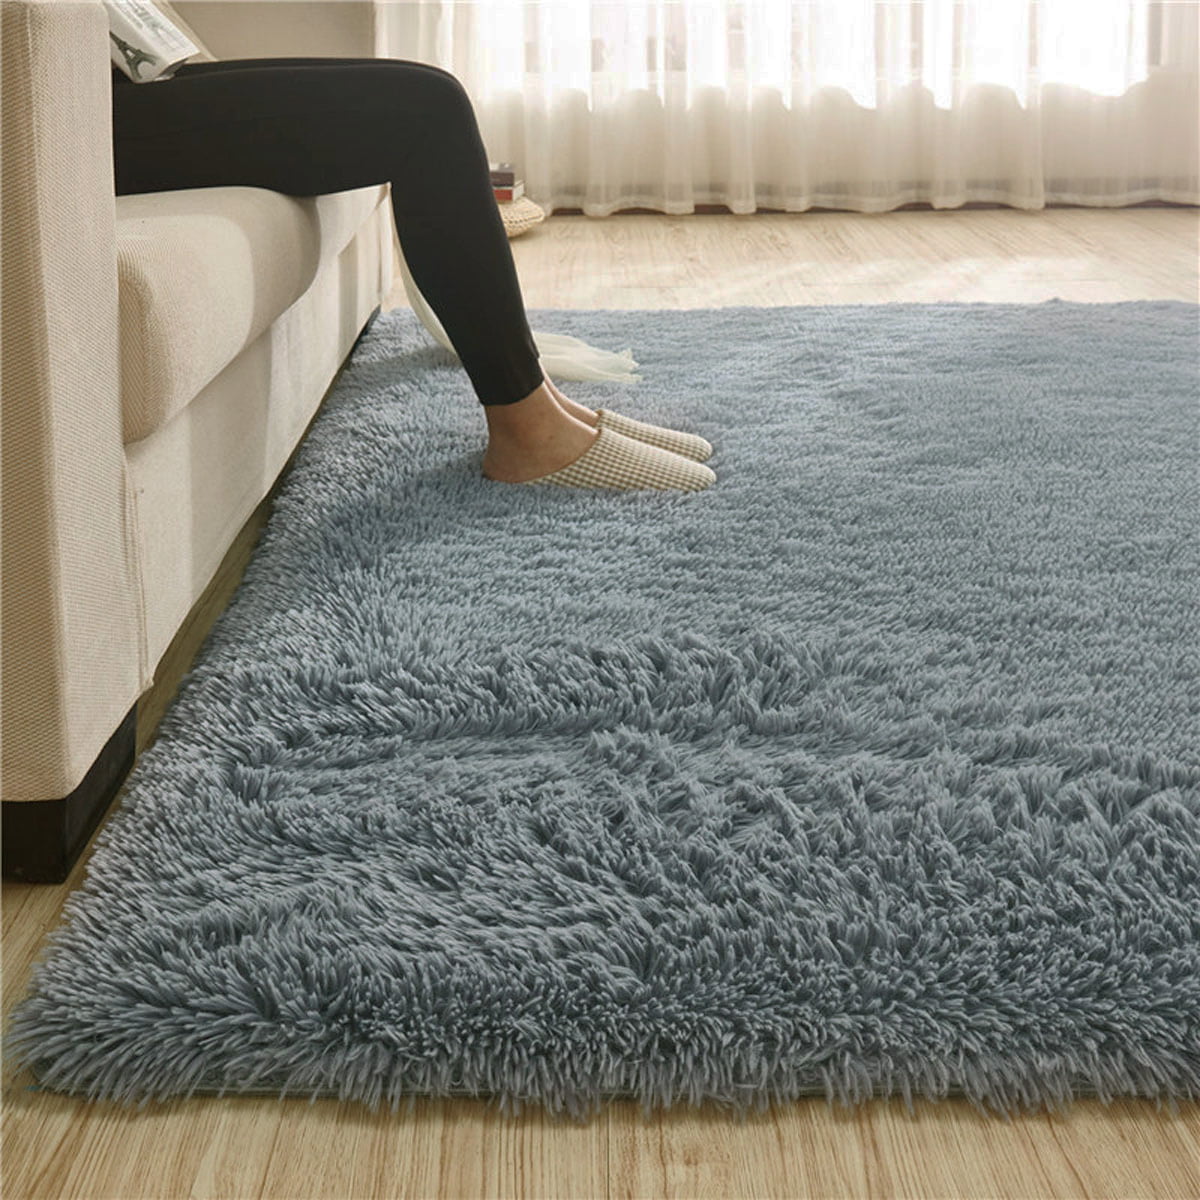 Large Fluffy Soft Carpet Hairy Shaggy Floor Bedroom Rug Area Anti-Skid Plush Mat 